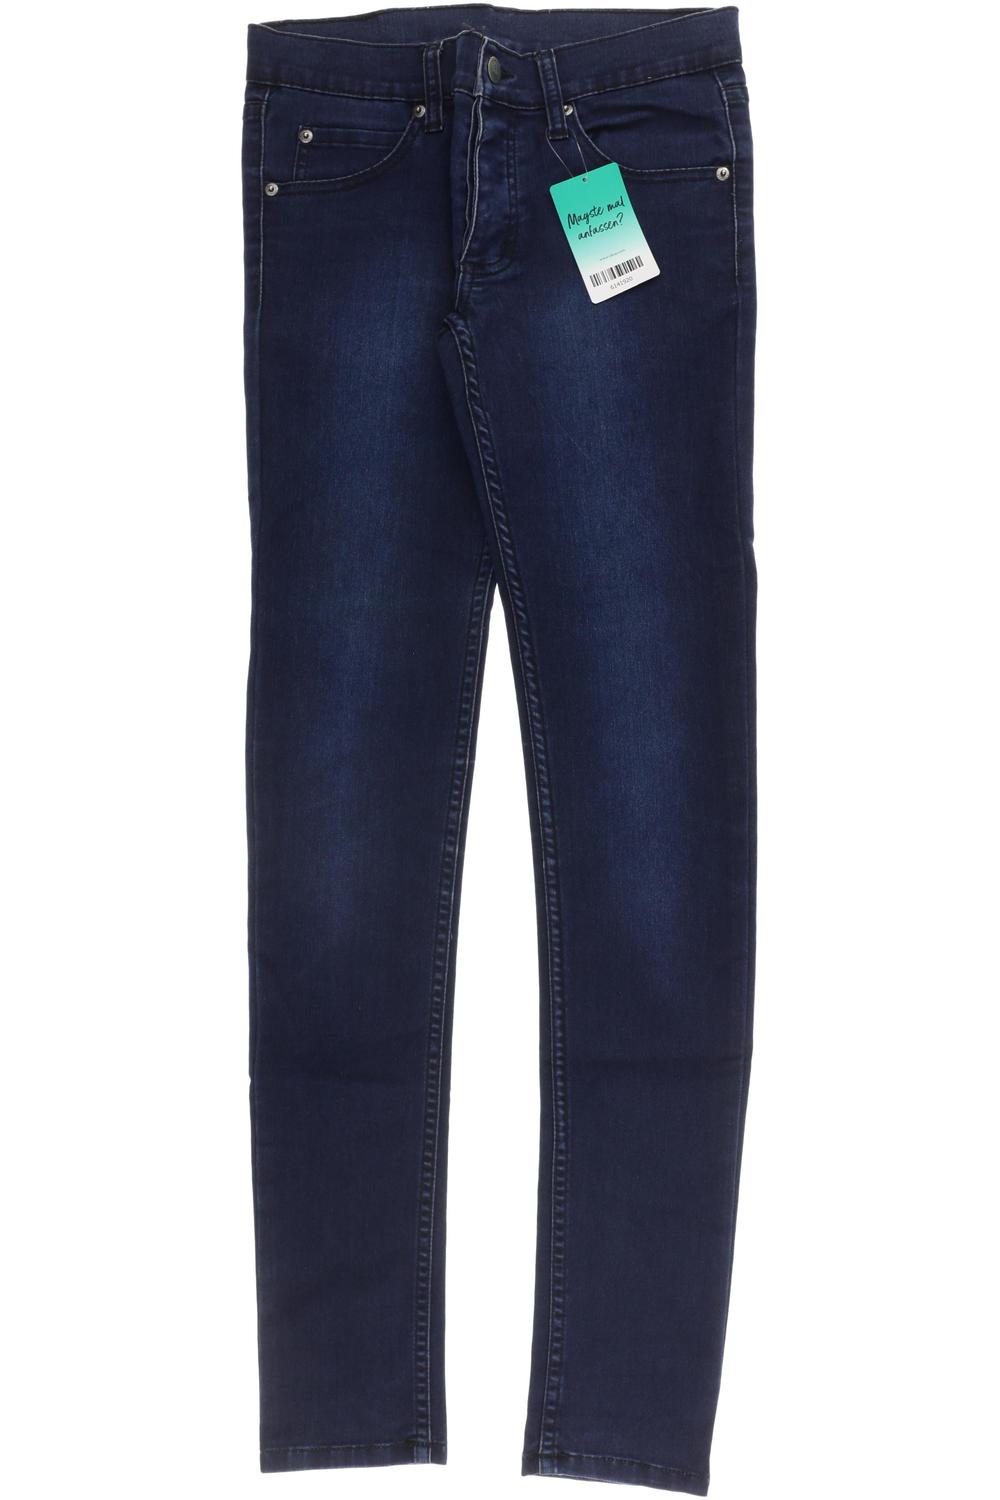 Cheap Monday Damen Jeans Inch 26 Second Hand Kaufen